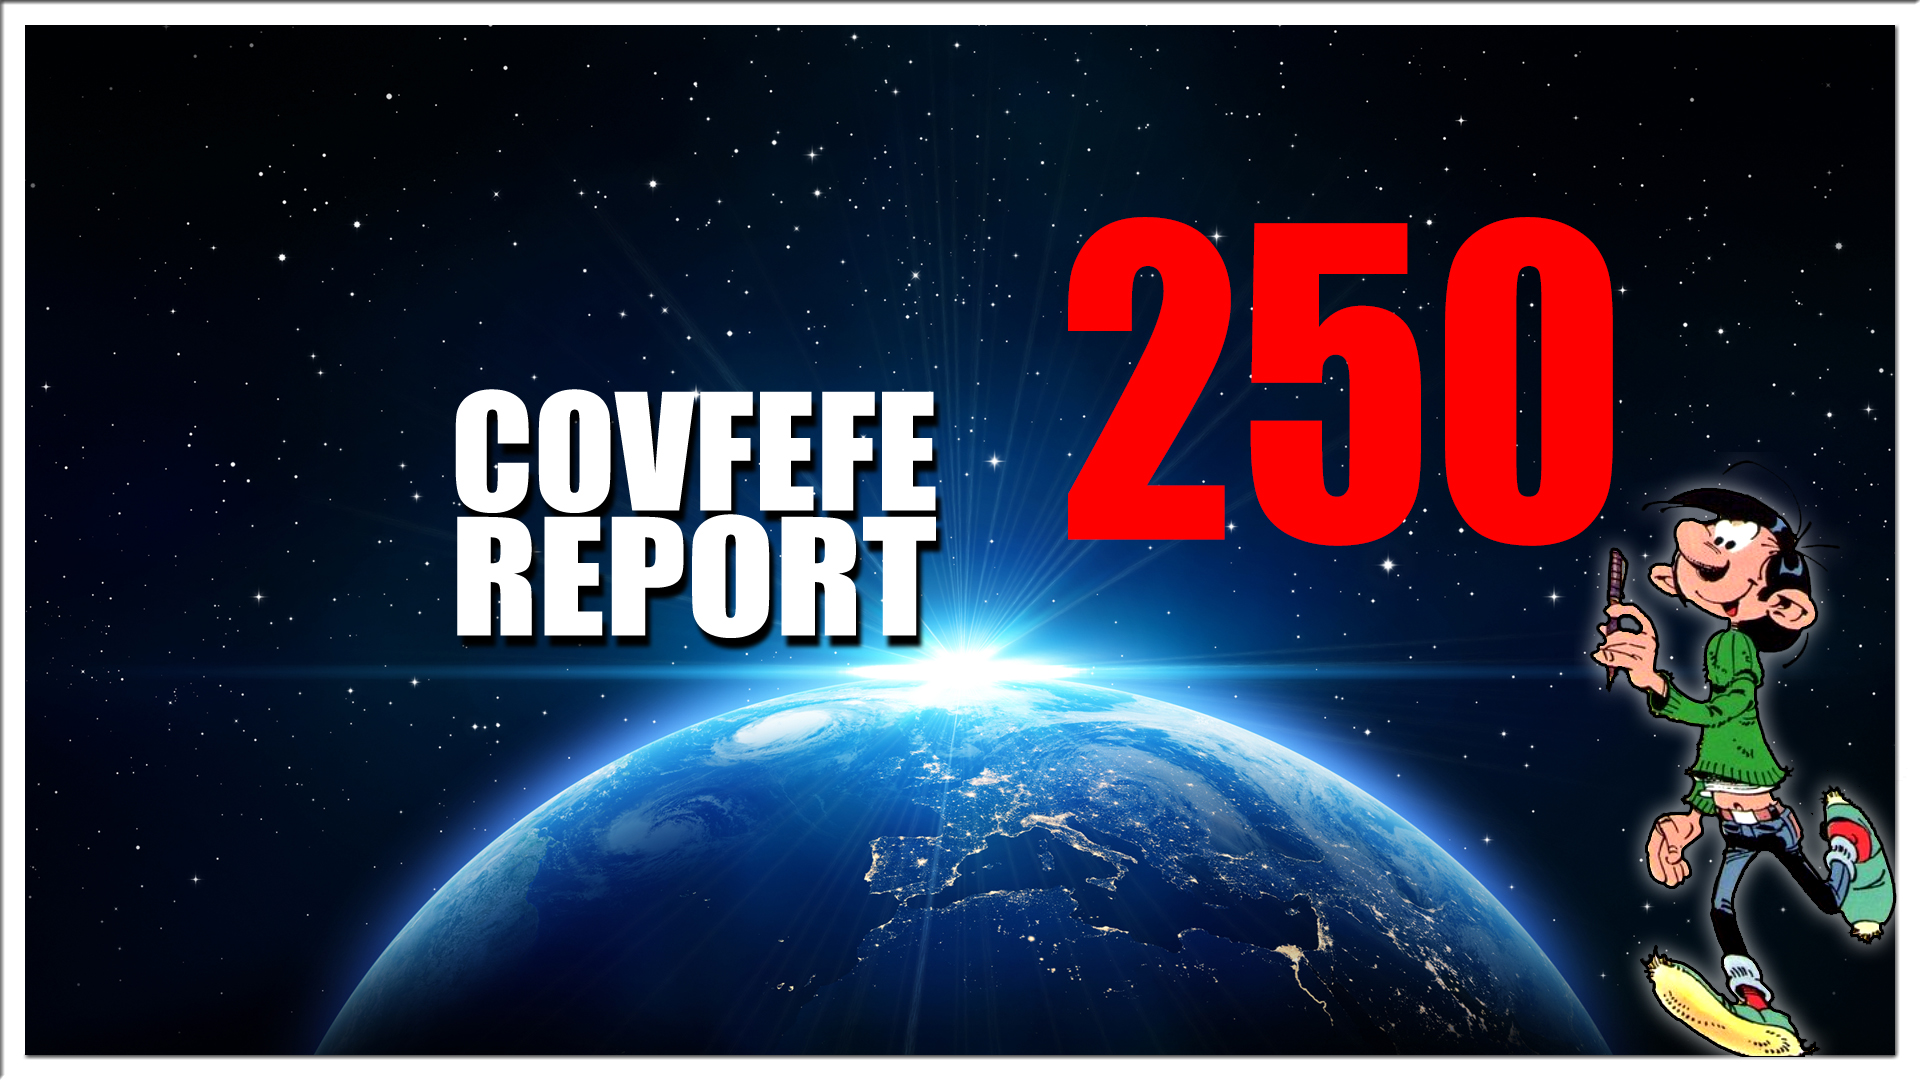 Covfefe Report 250. ngt